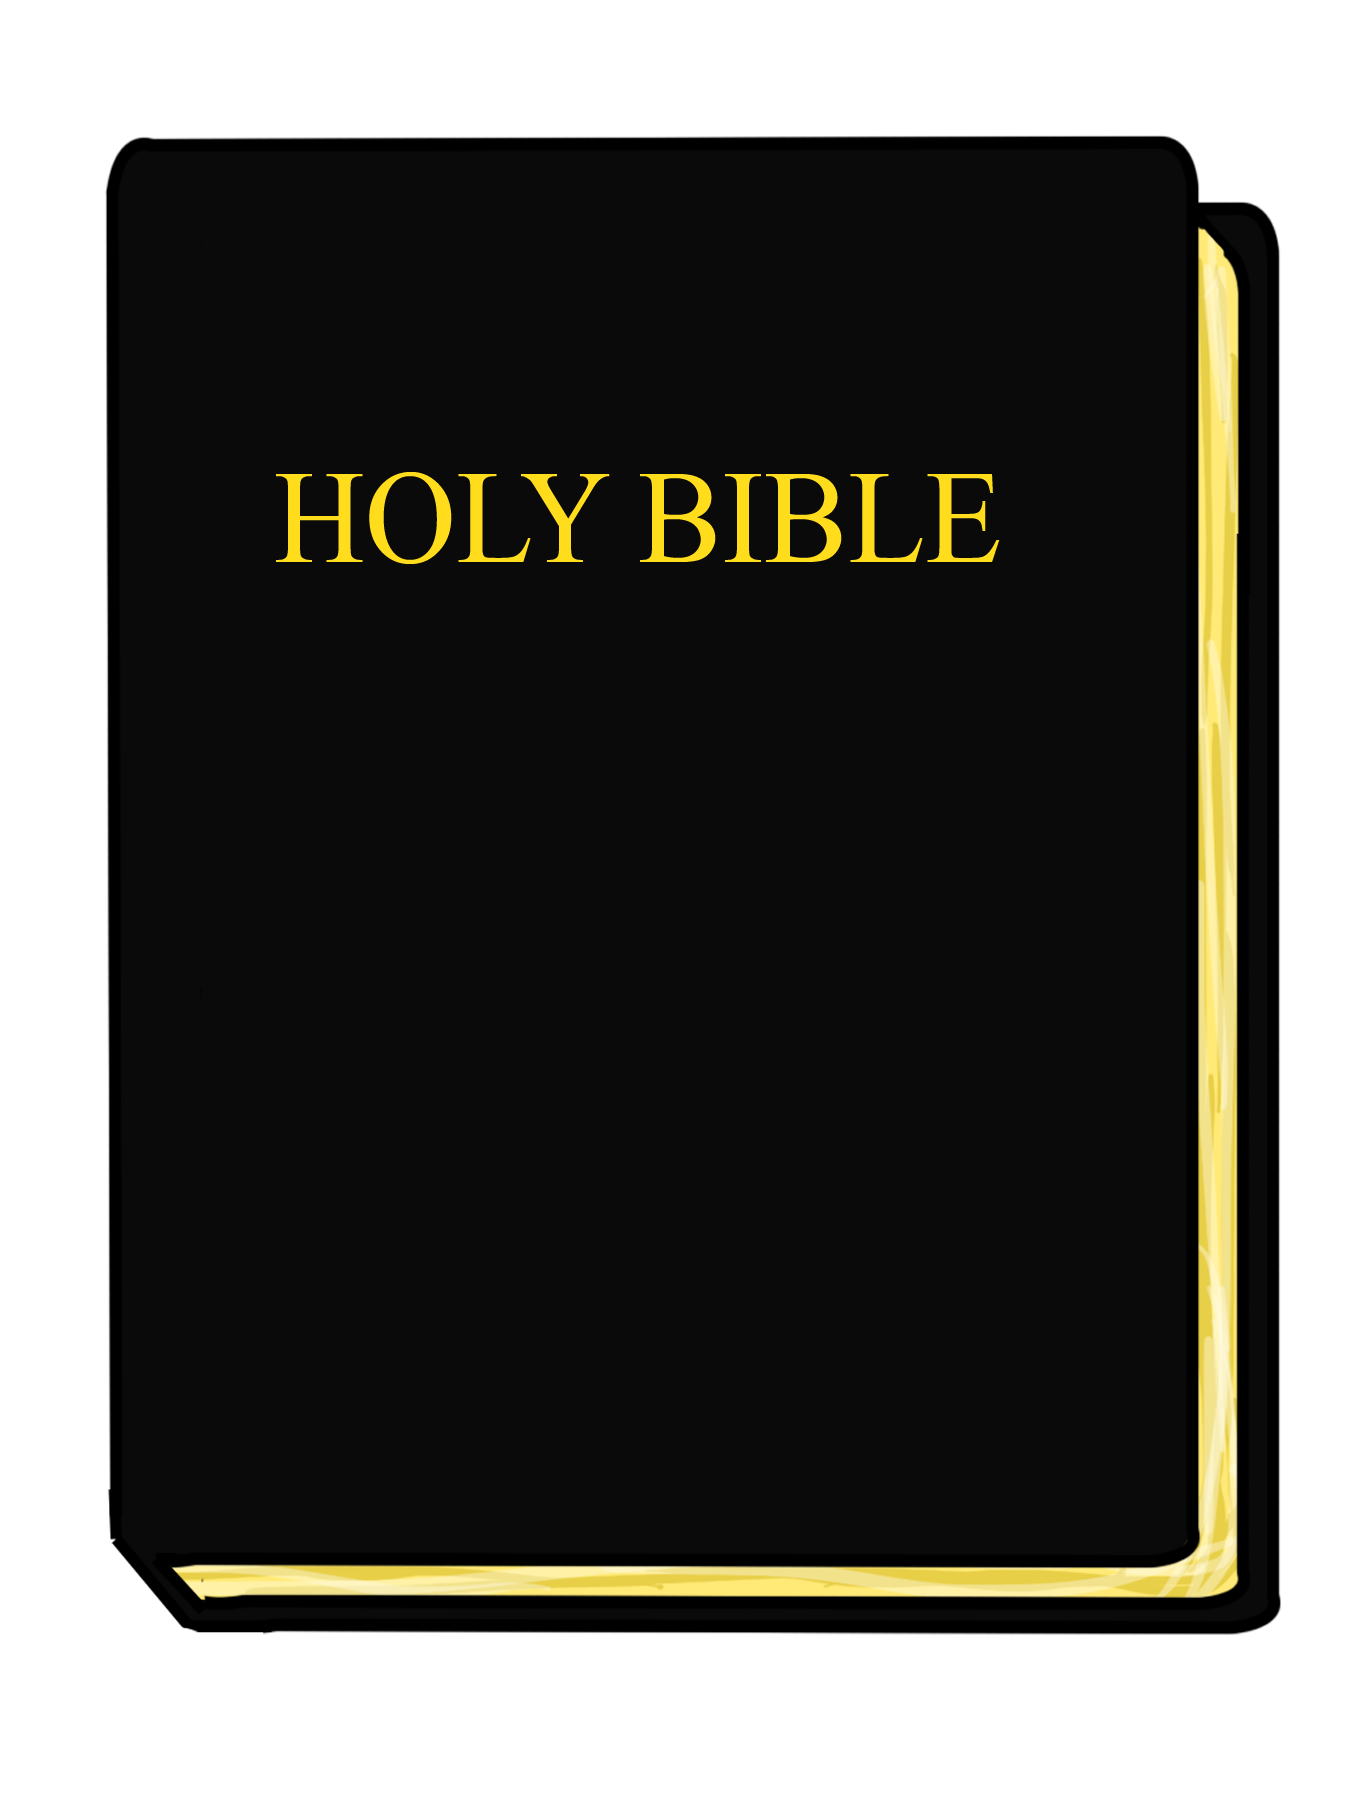 Bible free to use clip art 2 - Free Bible Clip Art